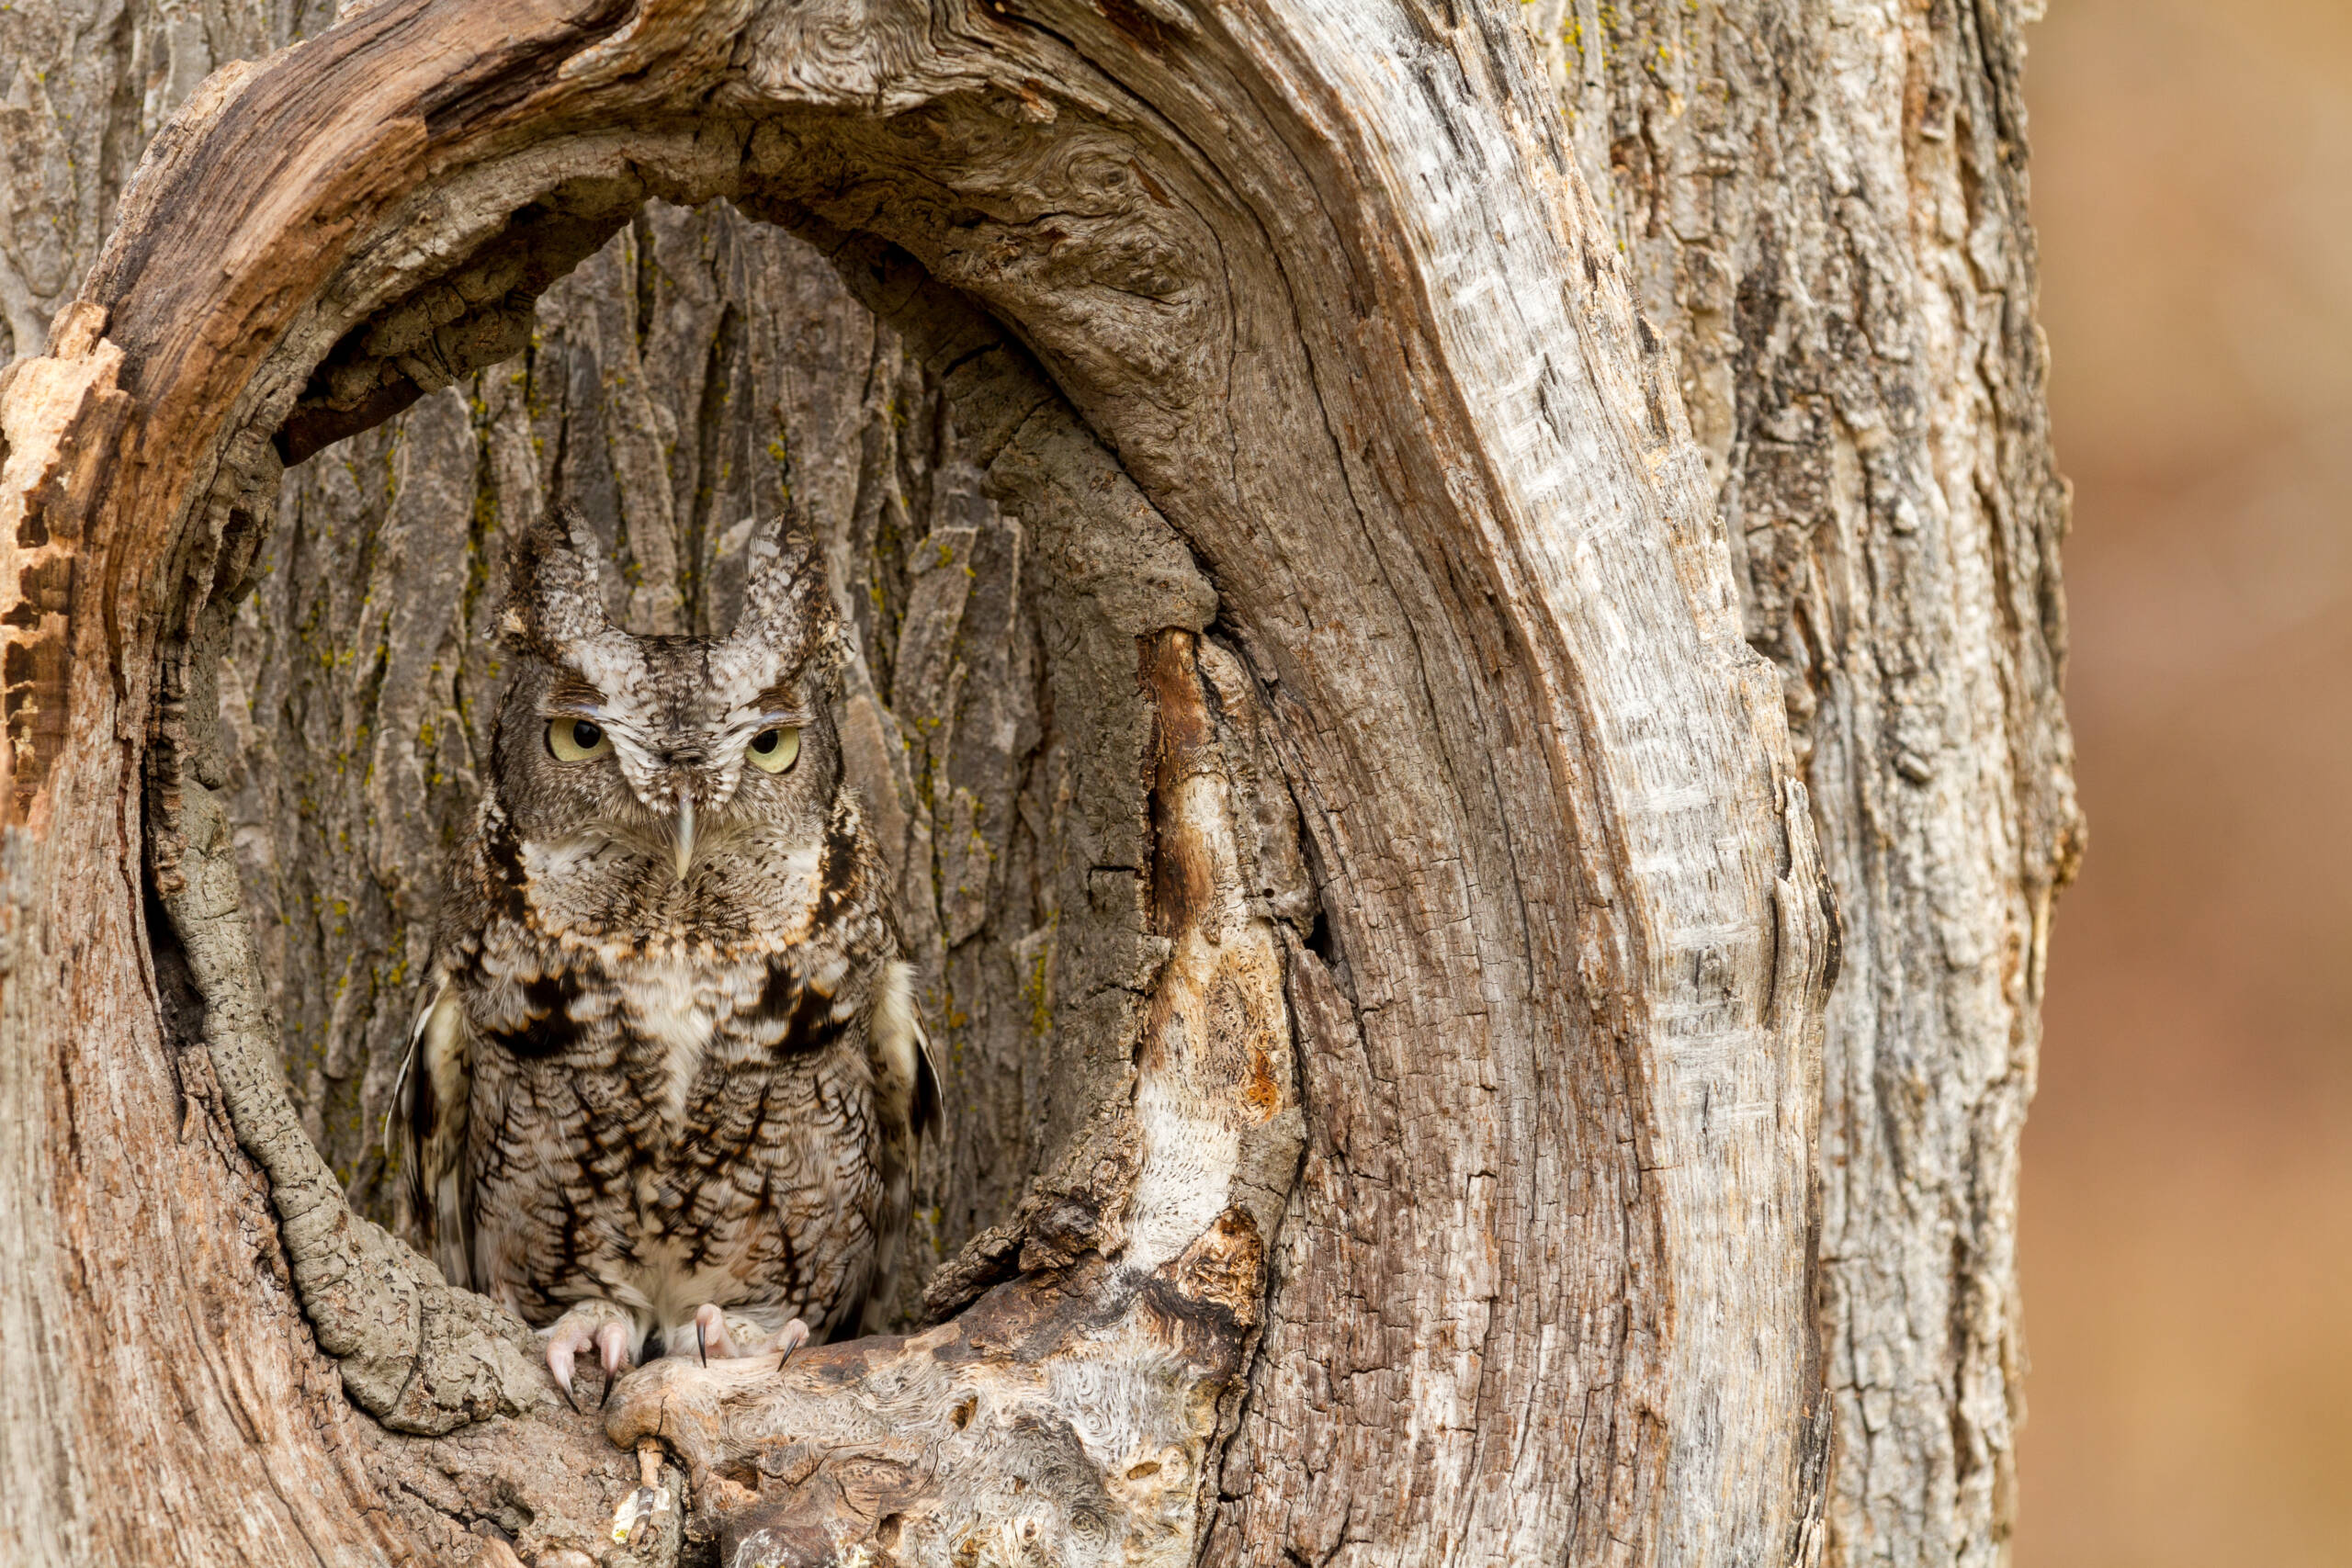 An eastern screech owl tucking into a tree trunk